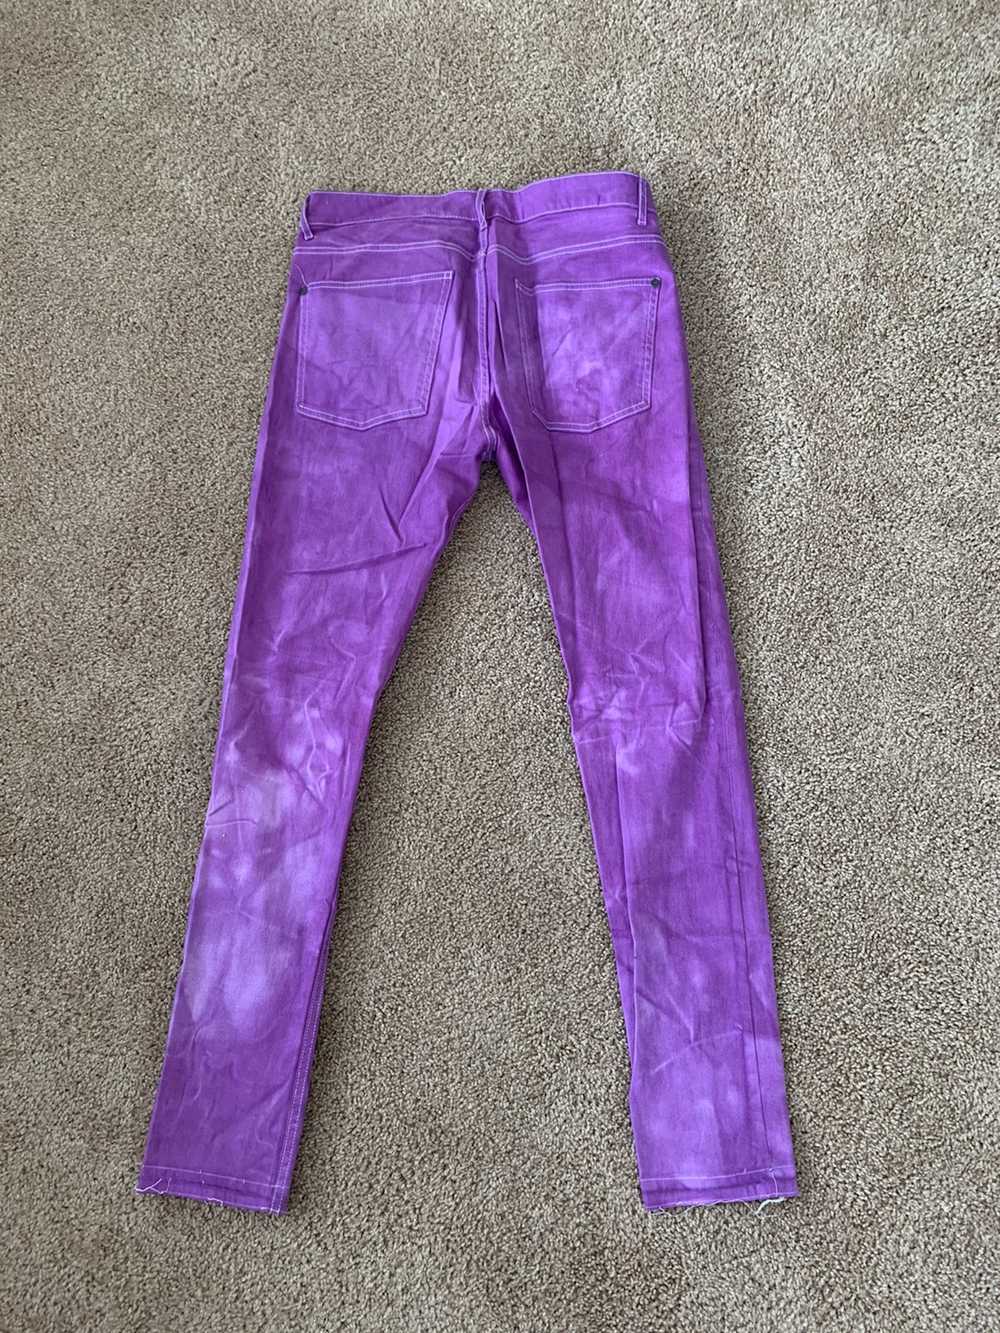 Custom Custom Dyed Purple Denim - image 2